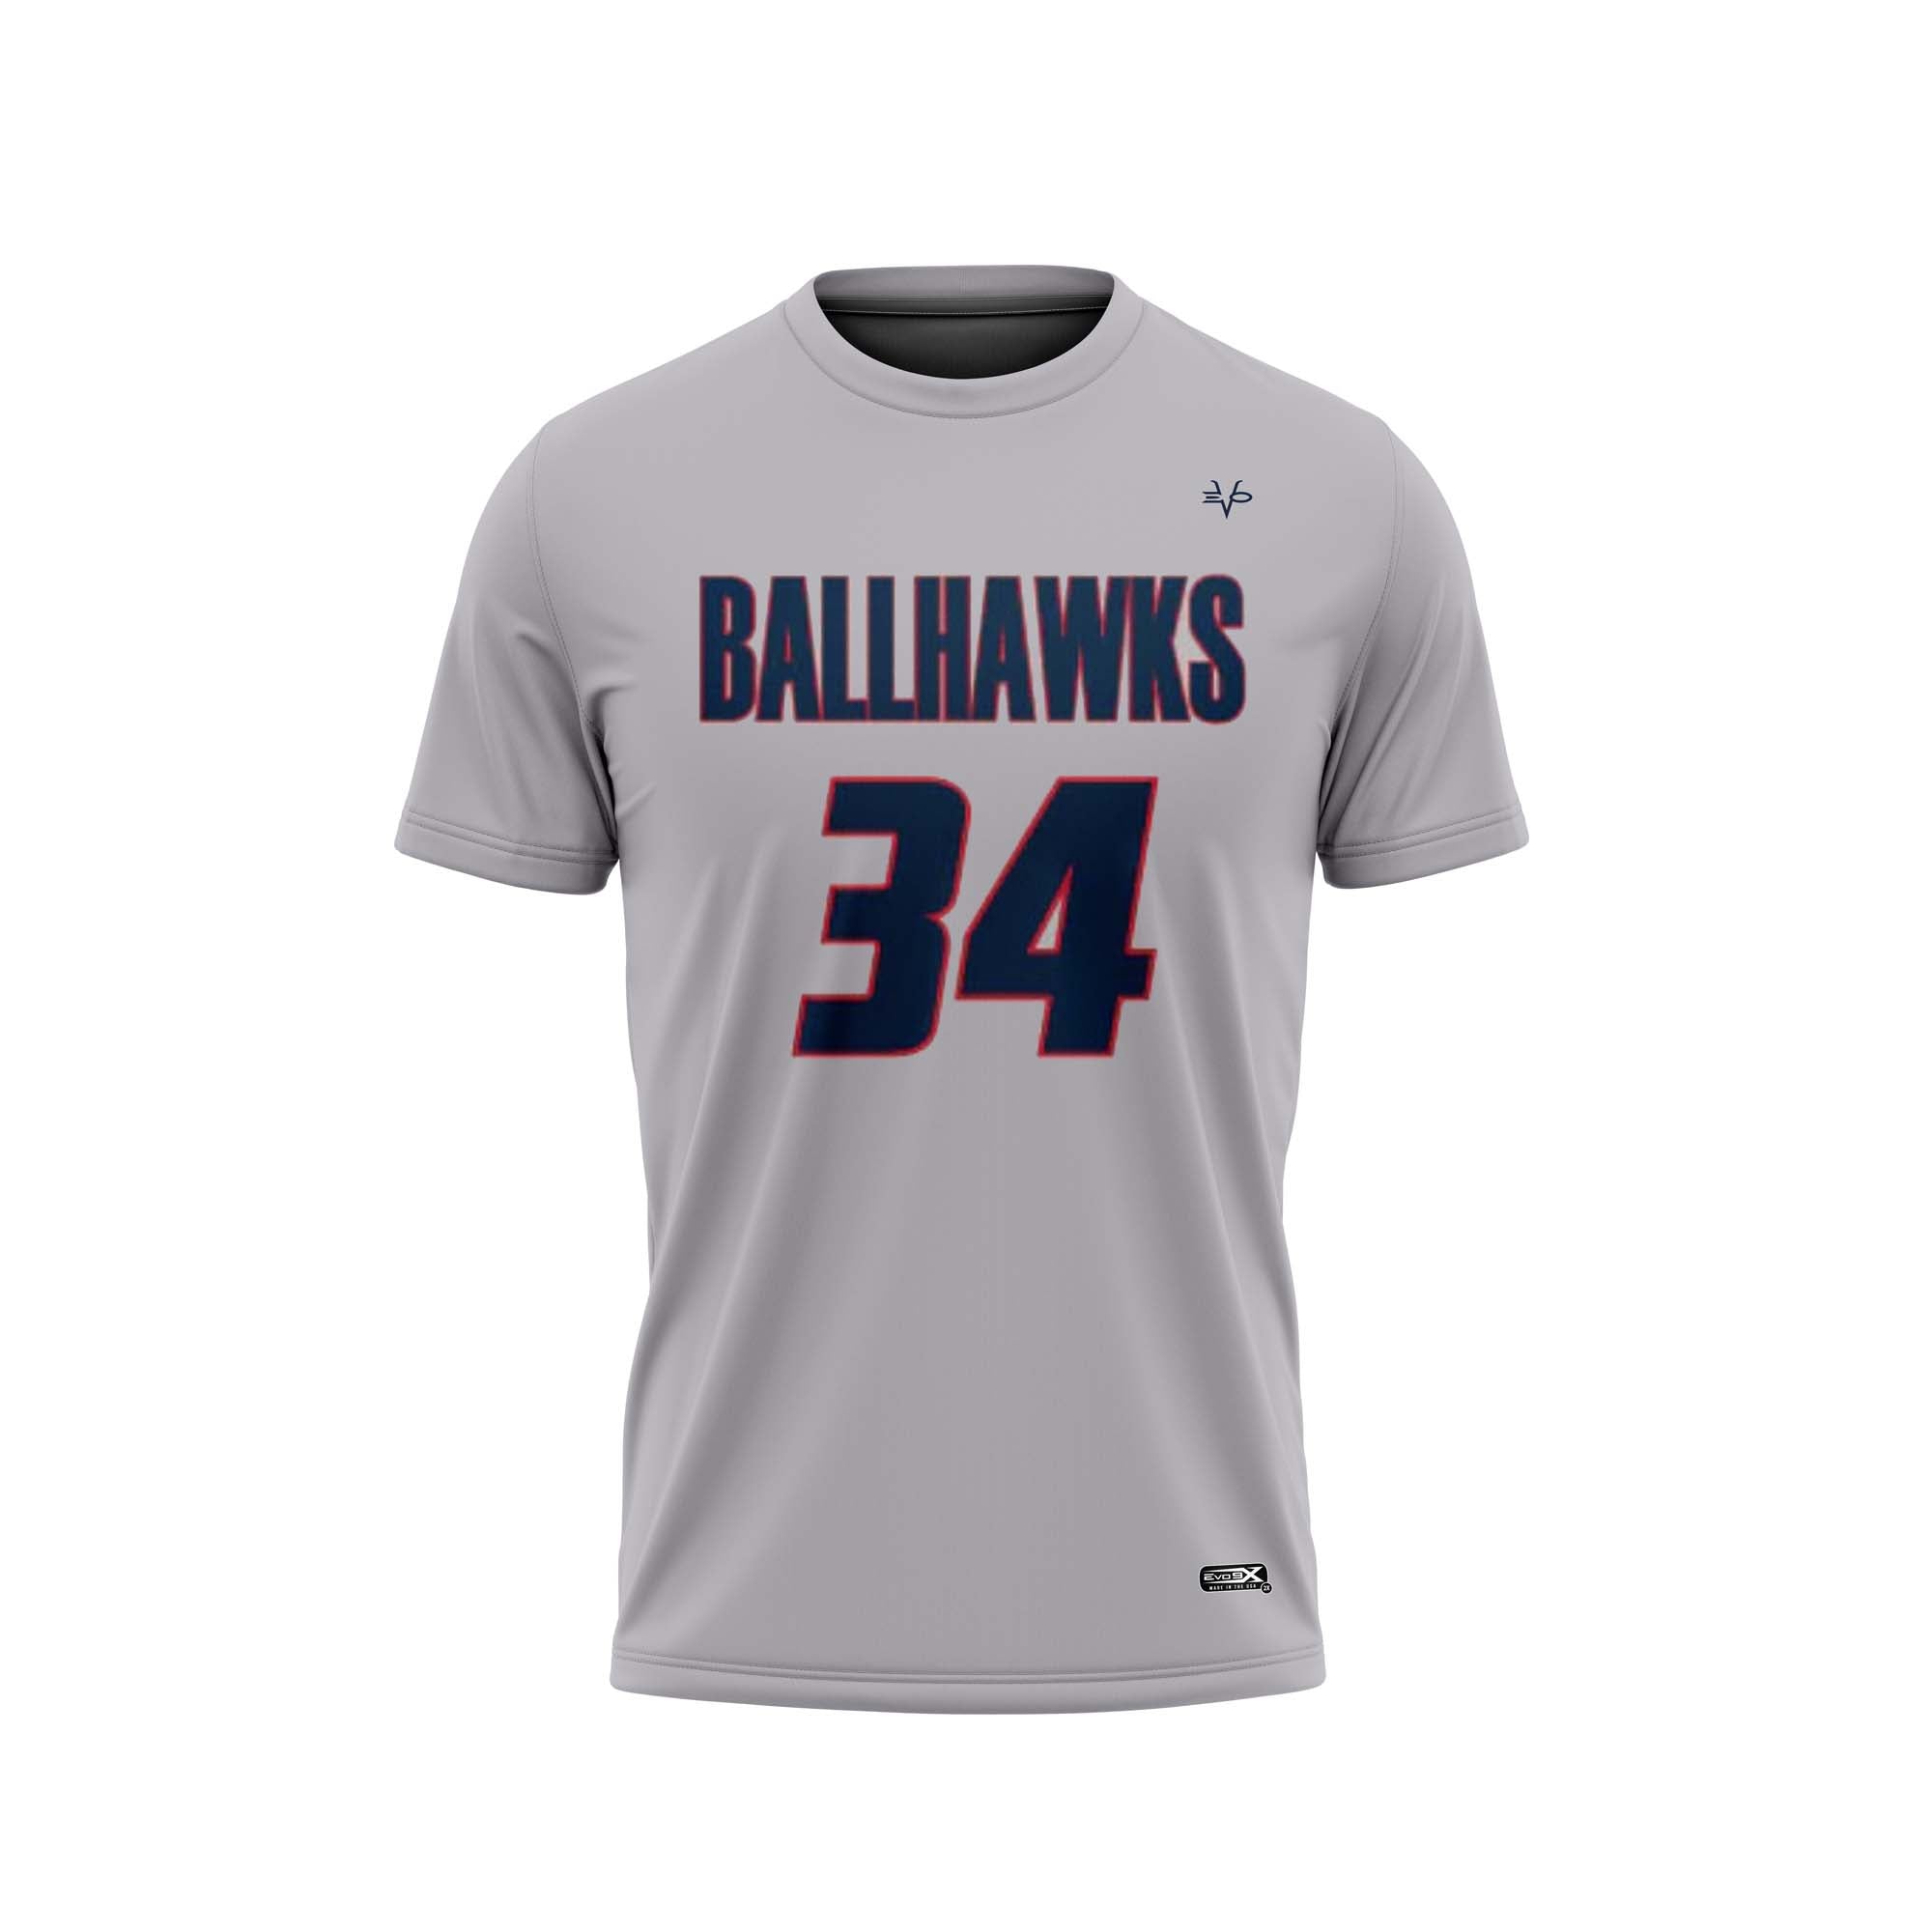 DAVINCI BALLHAWKS BASKETBALL Semi Sublimated Shirt Gray